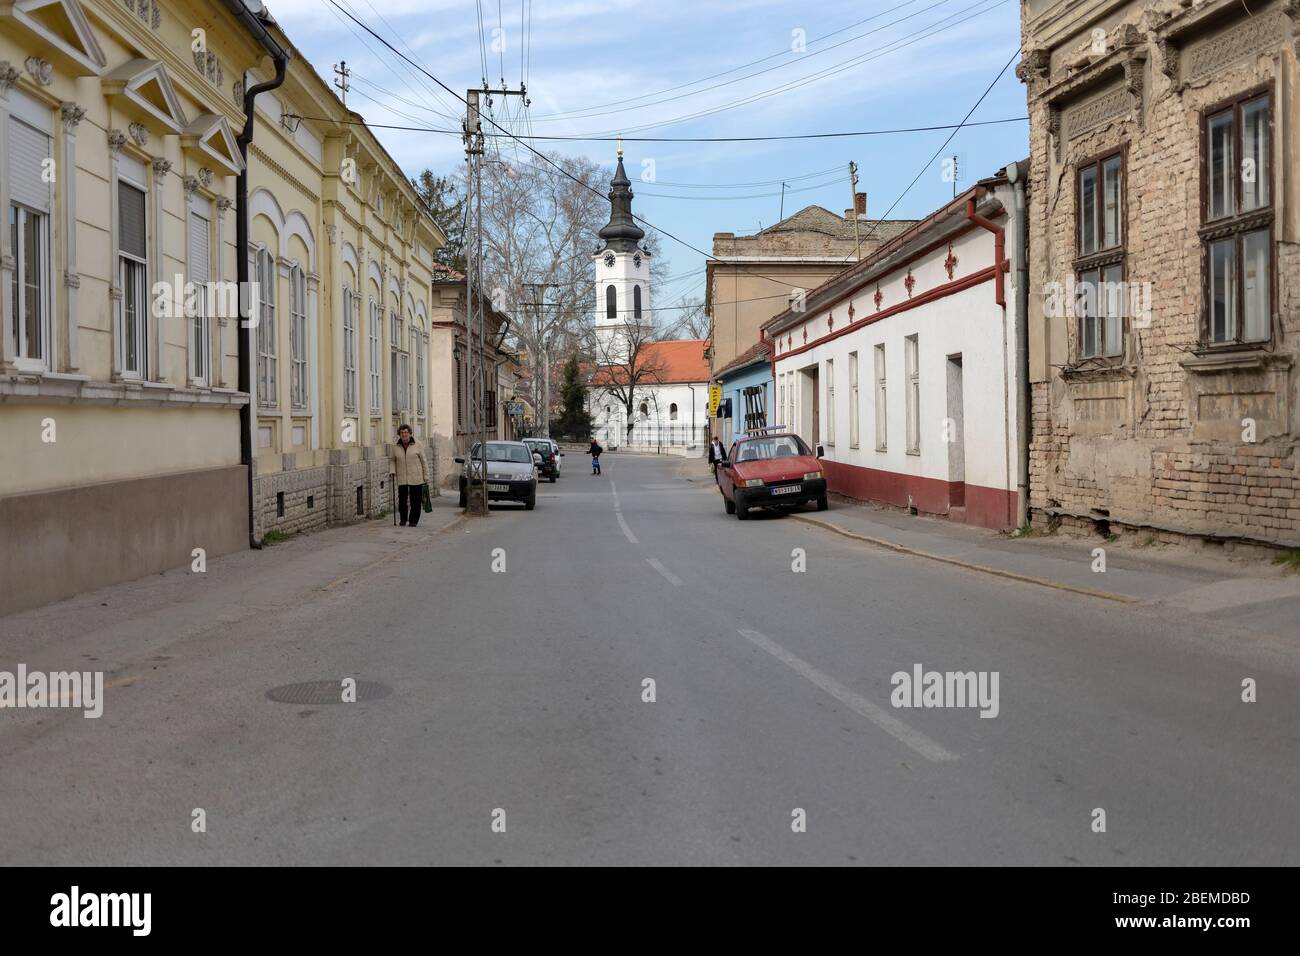 Serbia, 25 de febrero de 2020: Calle típica en Sremski Karlovci Foto de stock